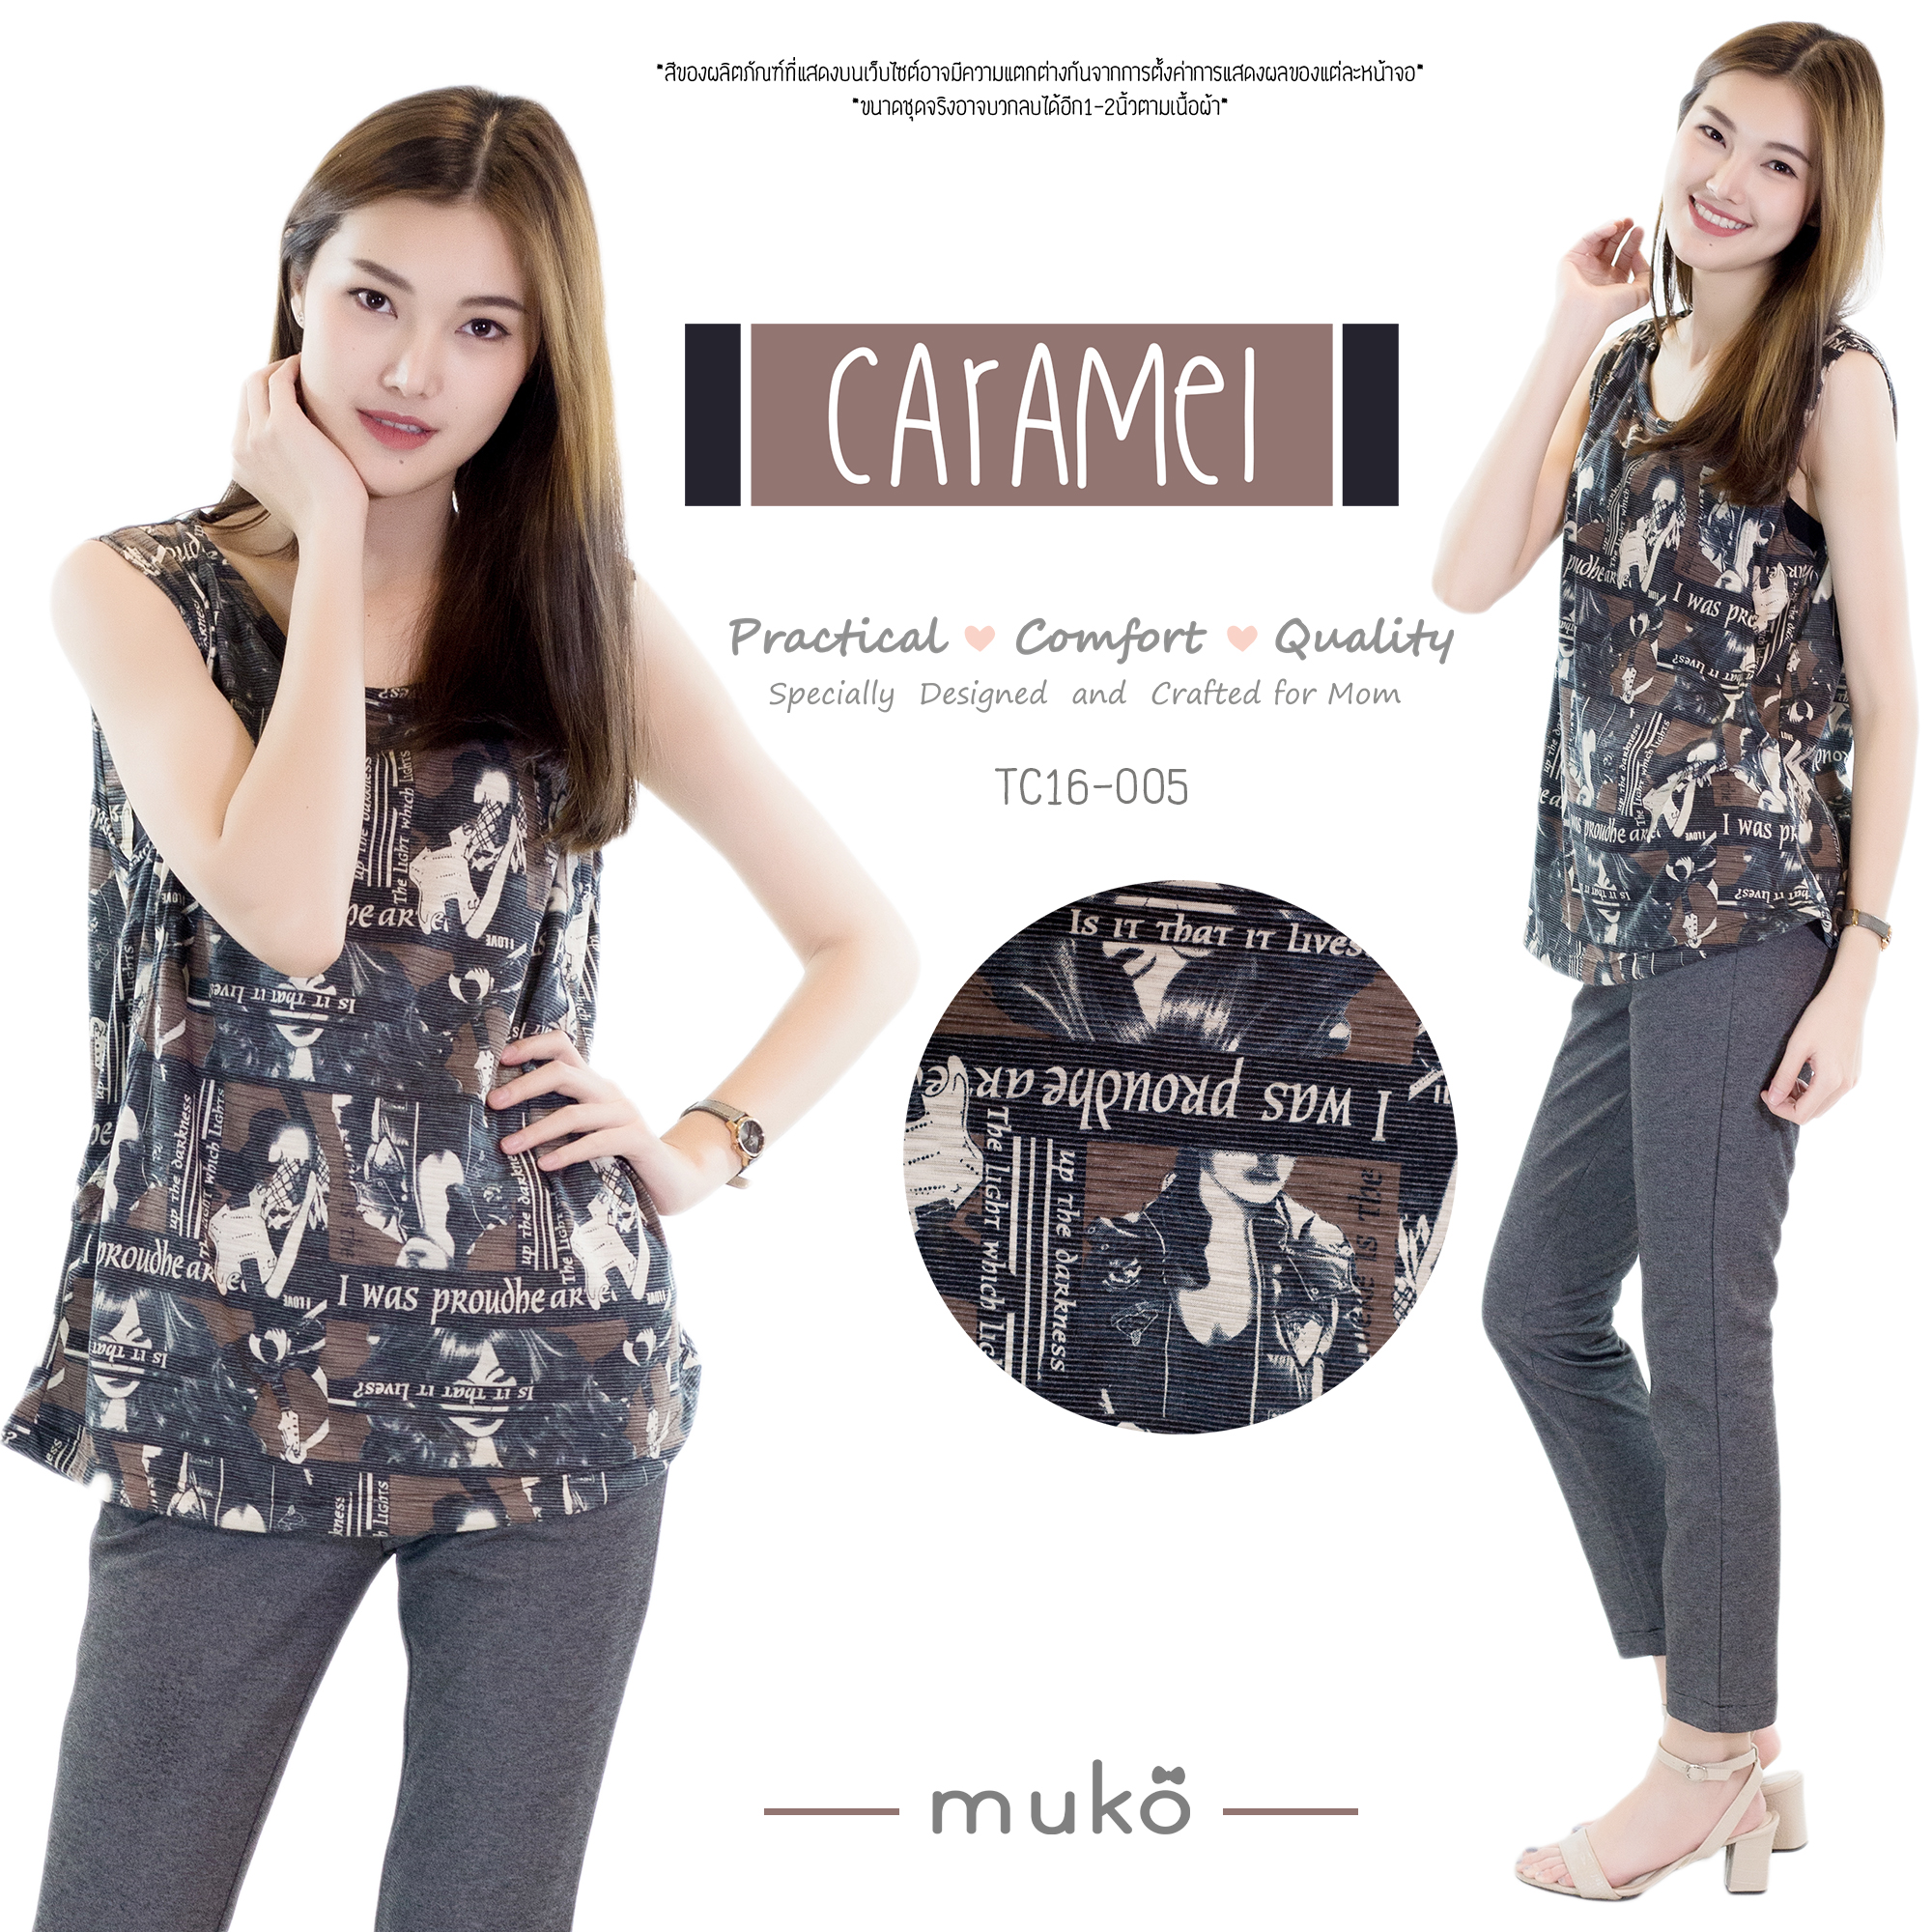 Muko Caramel  เสื้อเปิดให้นม ผ้าคอตตอนยืด TC16-005 สีน้ำตาลลายหน้าคน***(3ชุด1,200.-/6ชุด1,900.-)